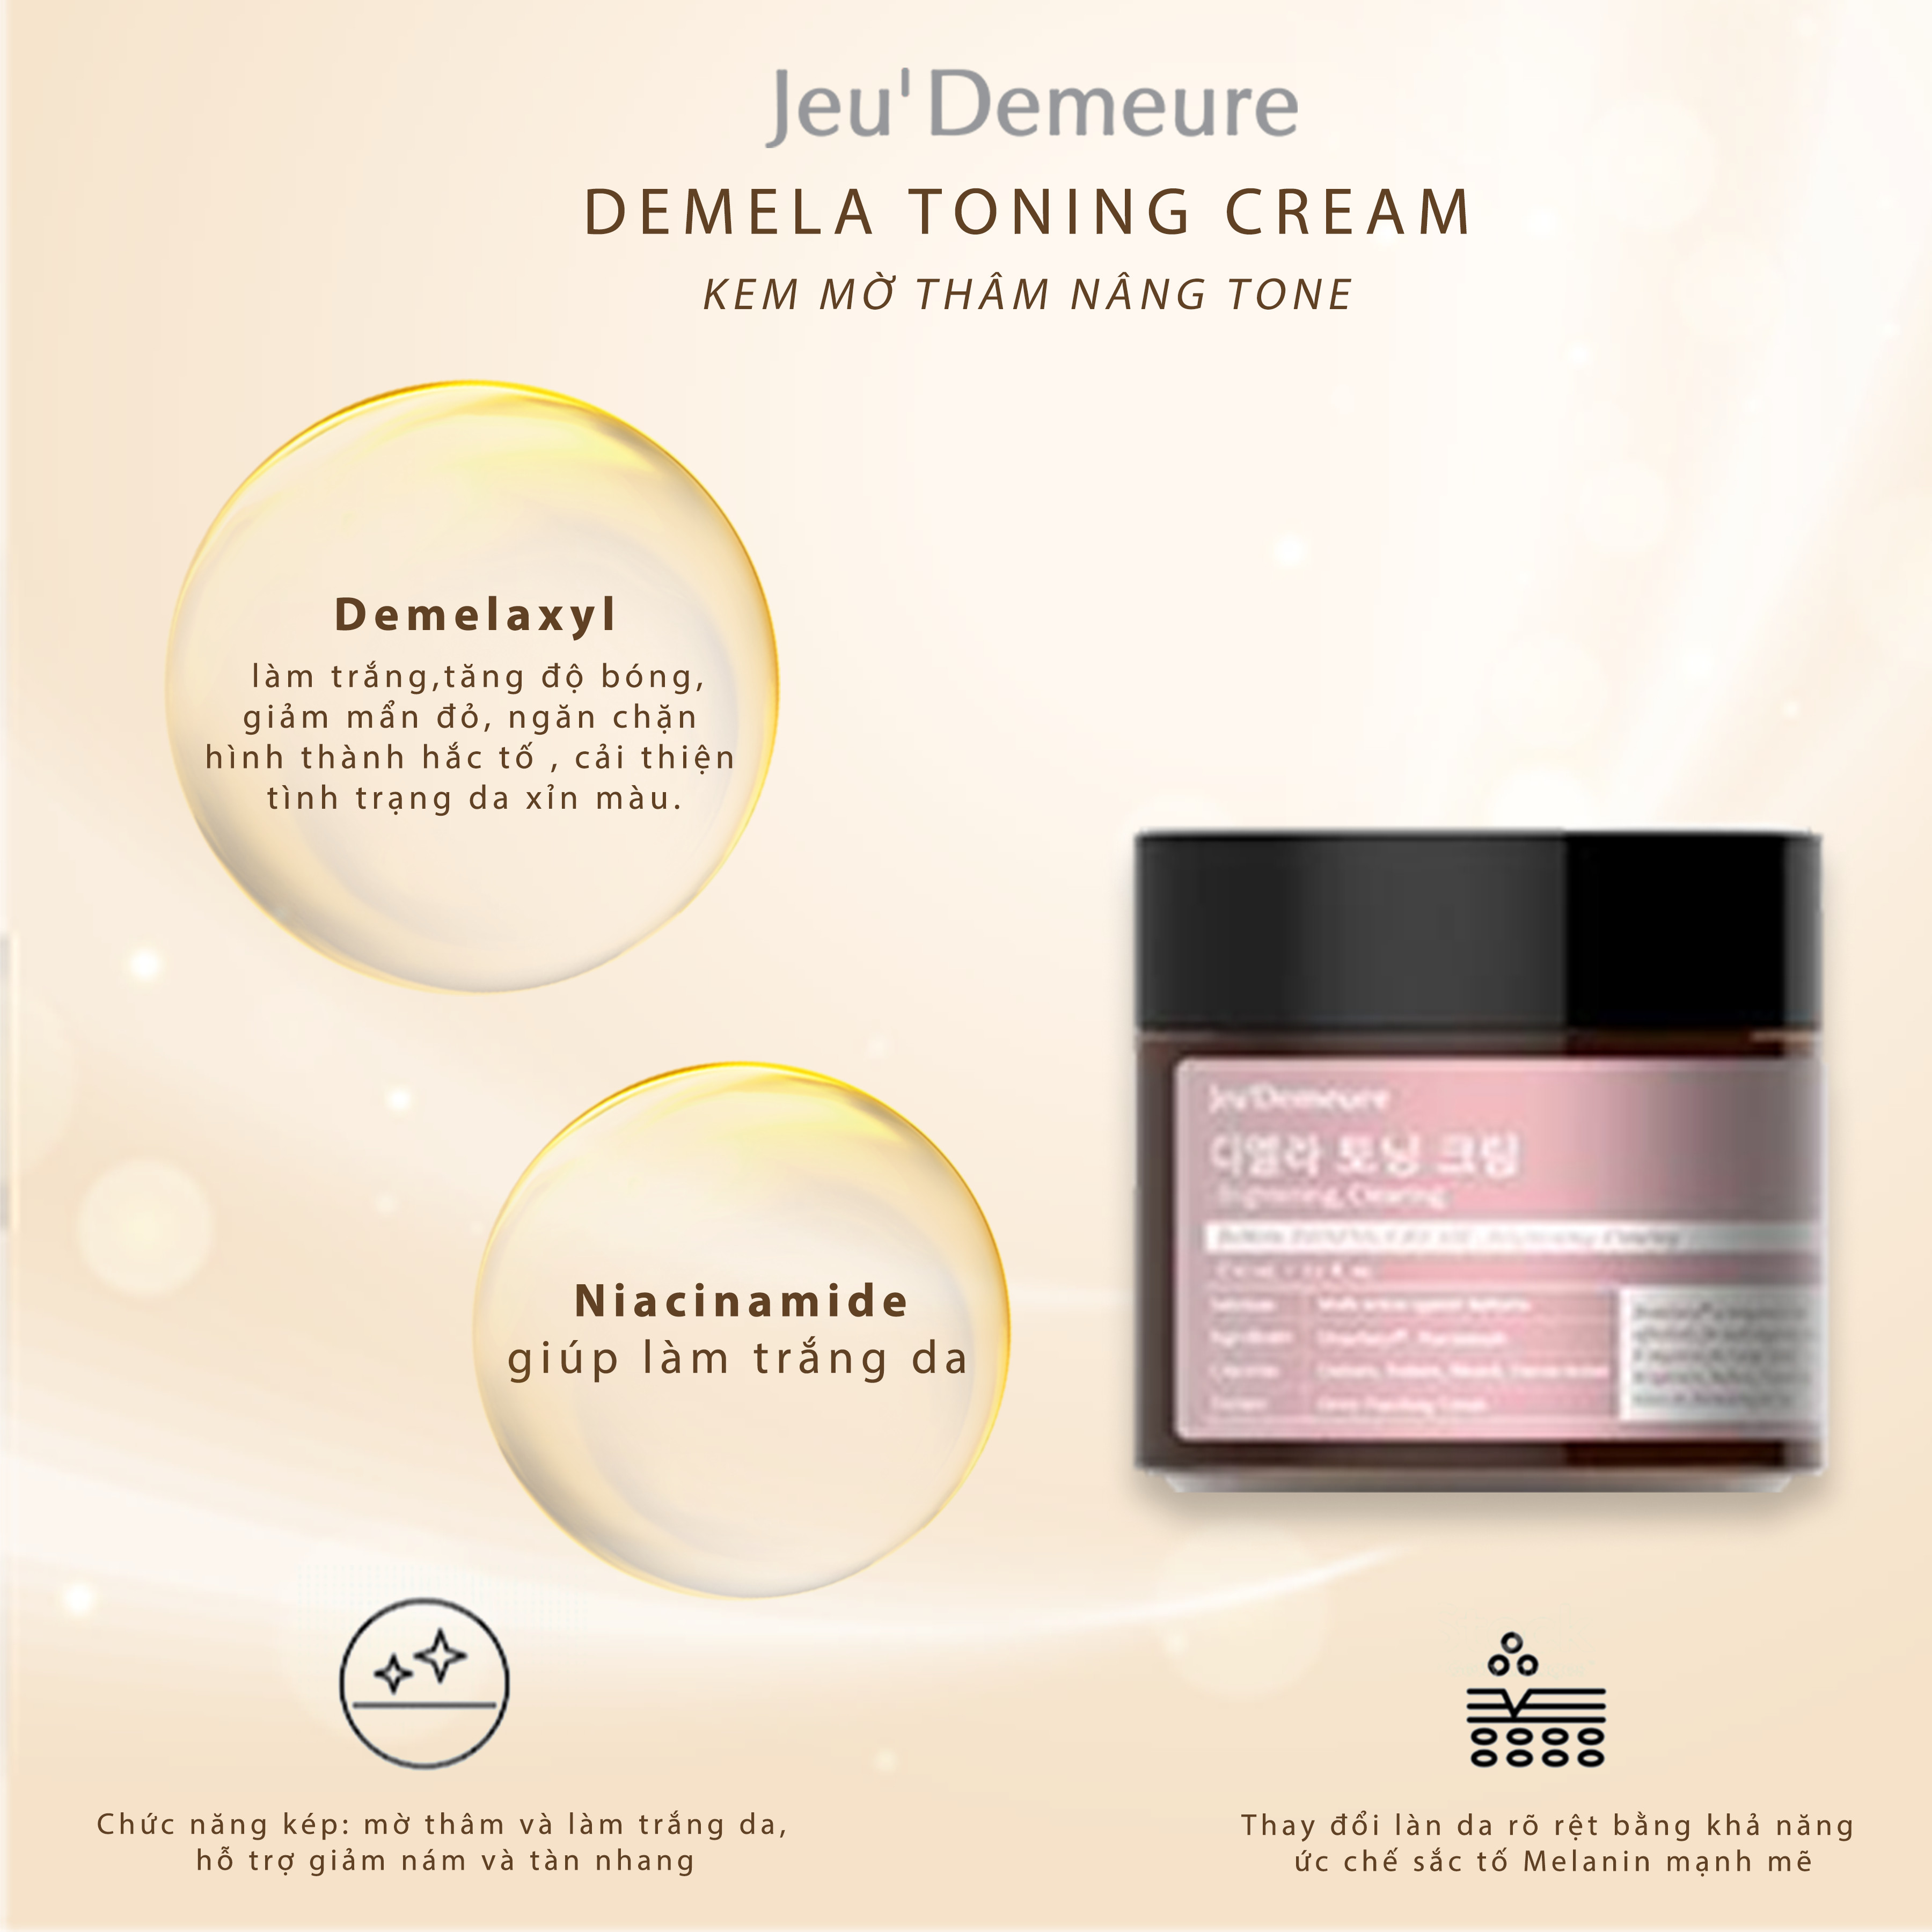 Kem dưỡng mờ thâm, nâng tone da 62ml - Demela Toning Cream - Jeu’Demeure